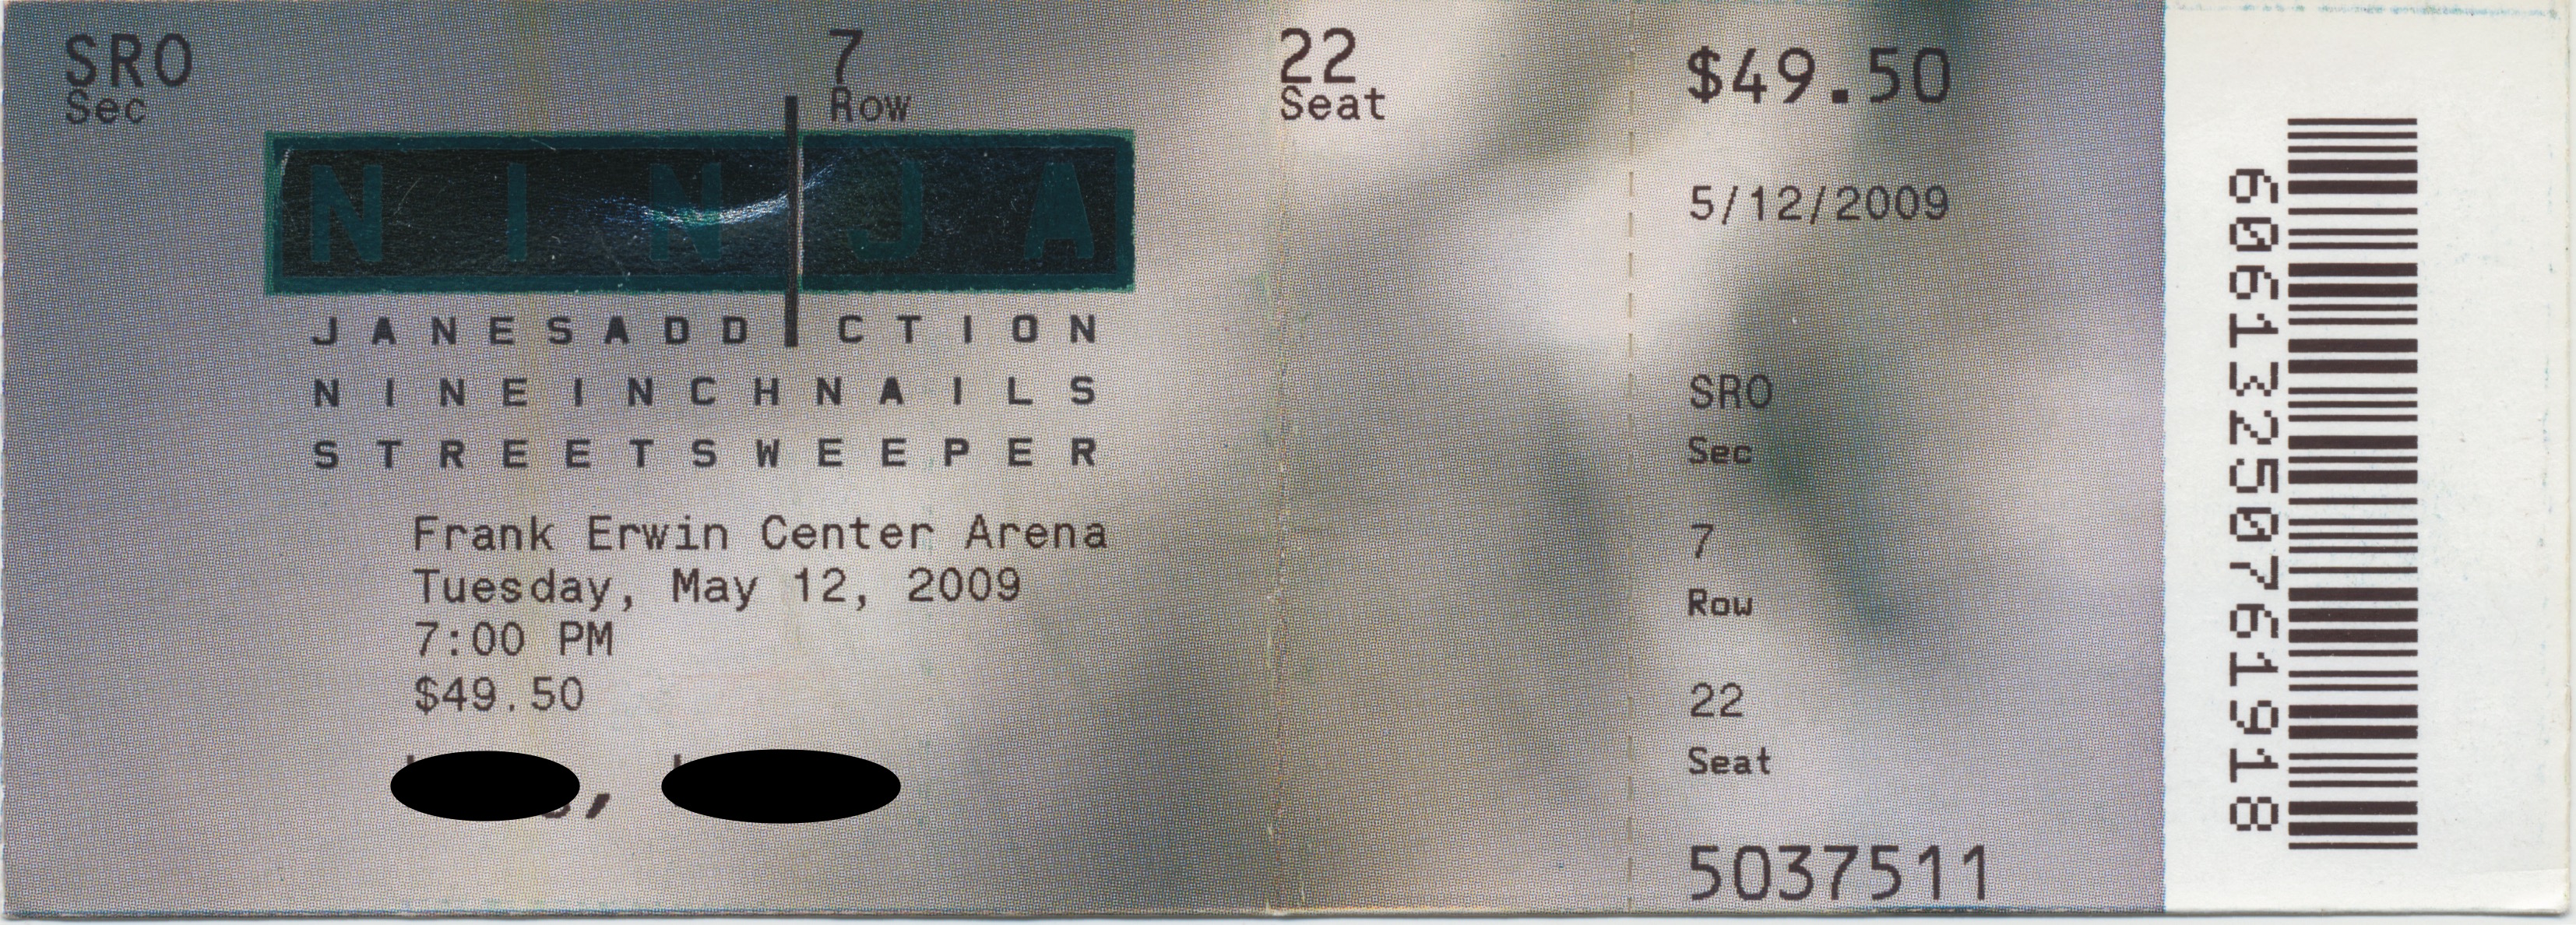 2009/05/12 Ticket